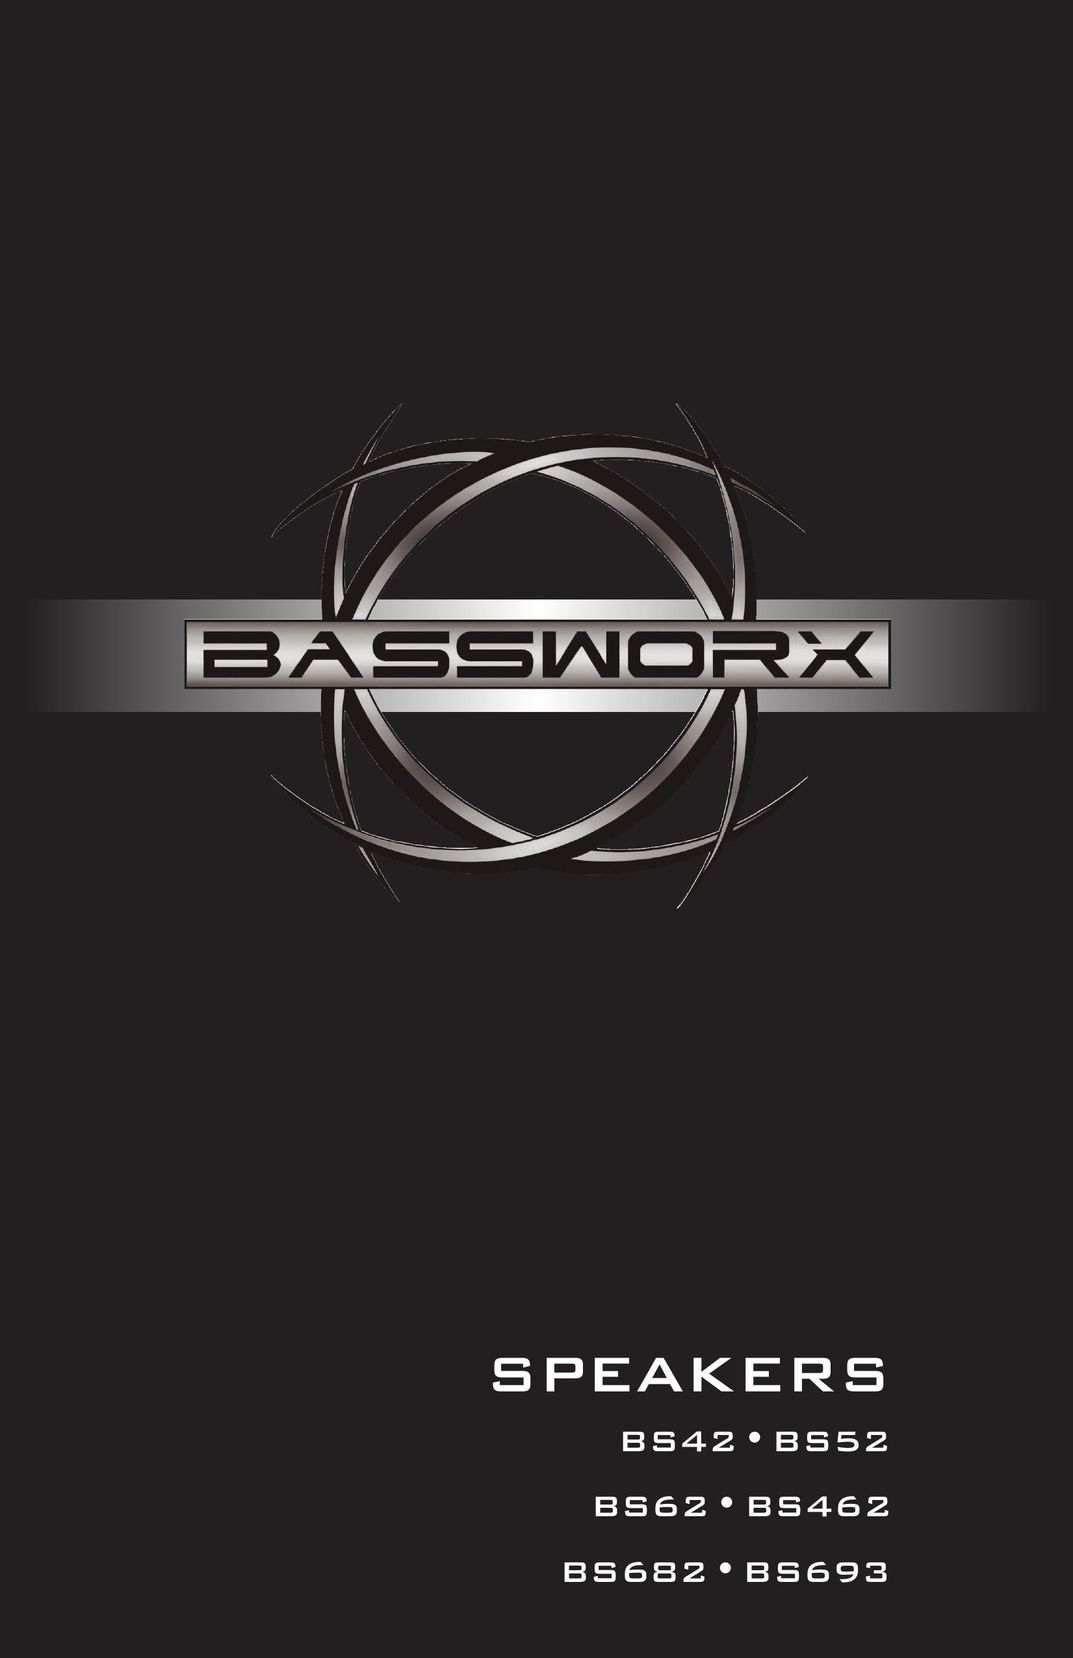 Bassworx BS682 Car Speaker User Manual